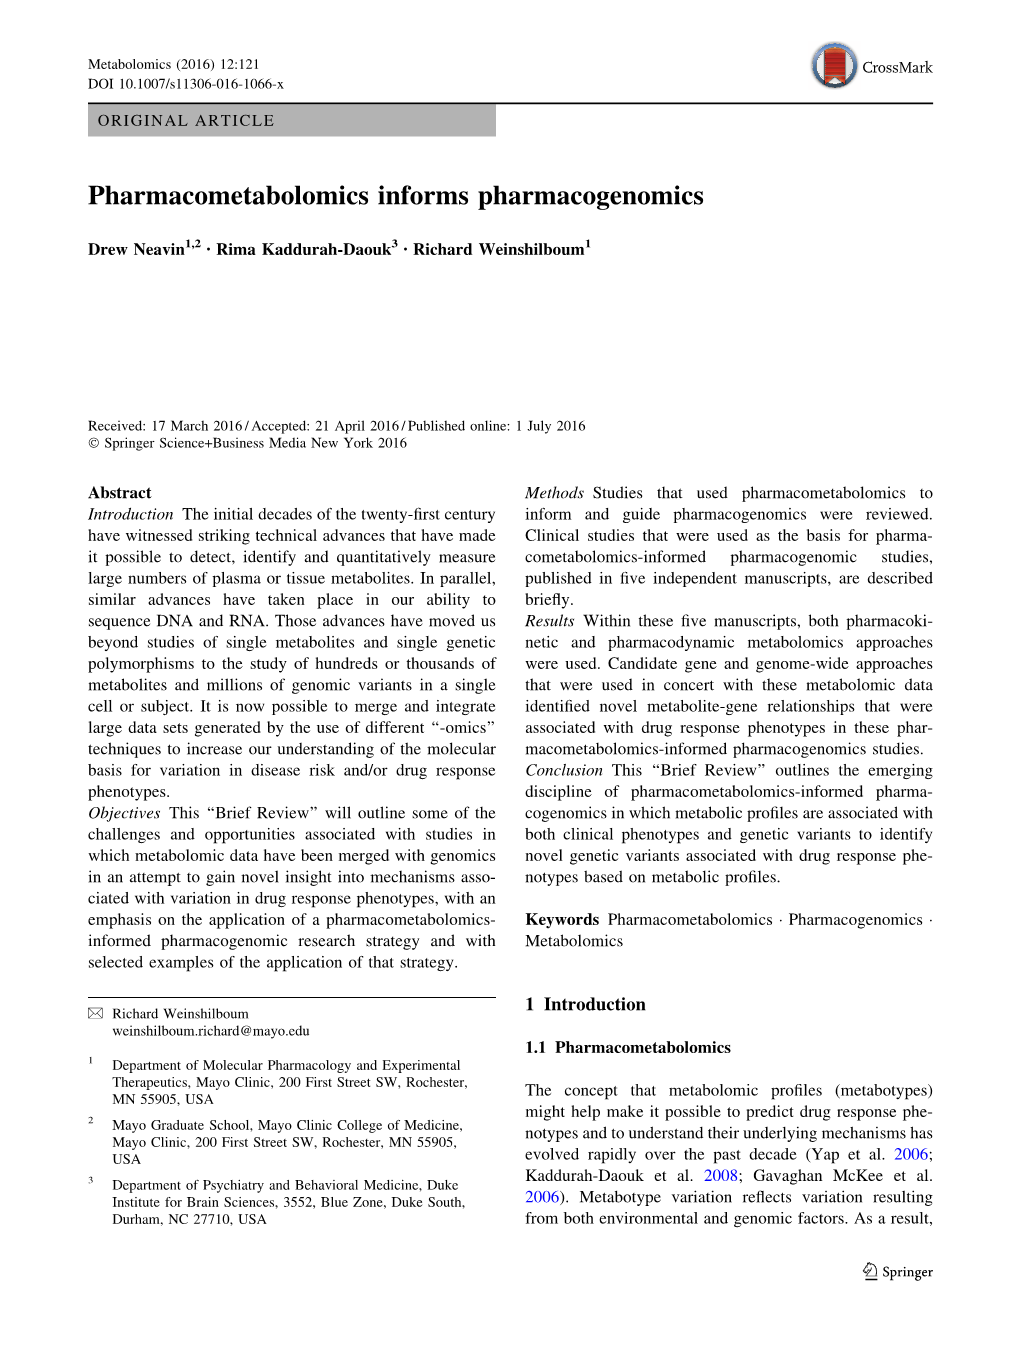 Pharmacometabolomics Informs Pharmacogenomics